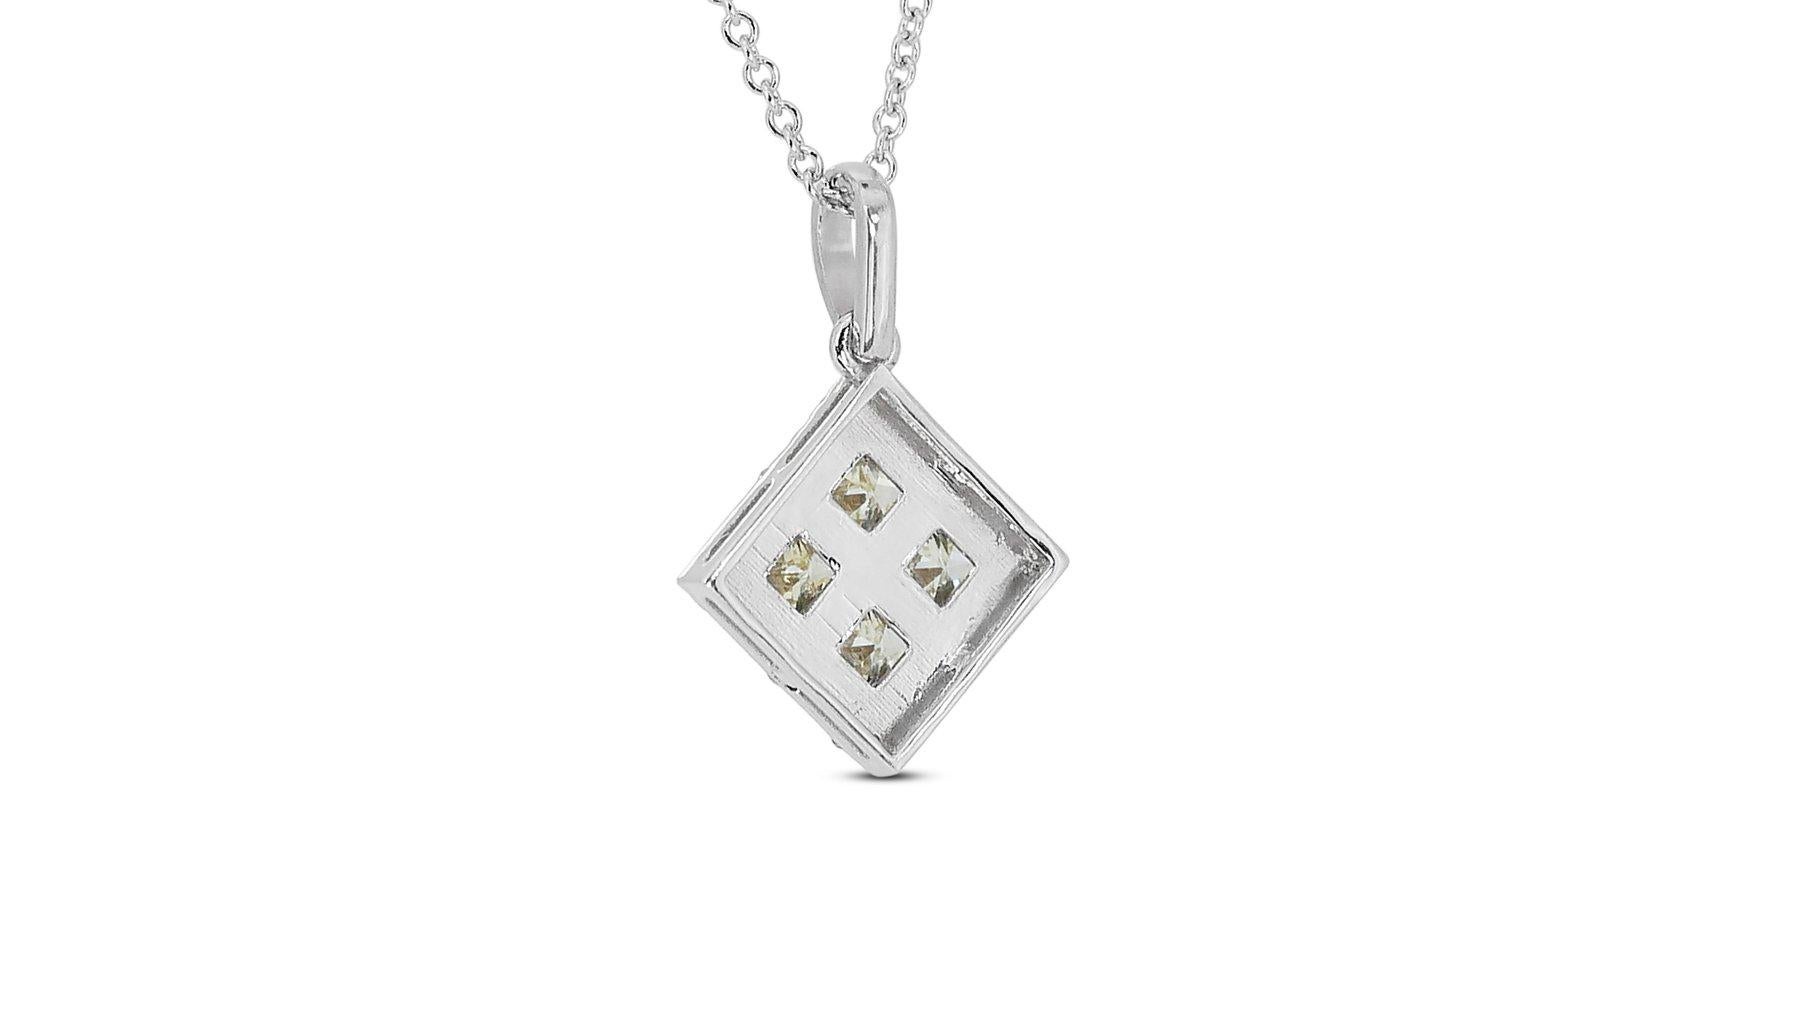 Women's Stunning 18K White Gold Necklace with a Dazzling 1.04 carat Princess cut Diamond